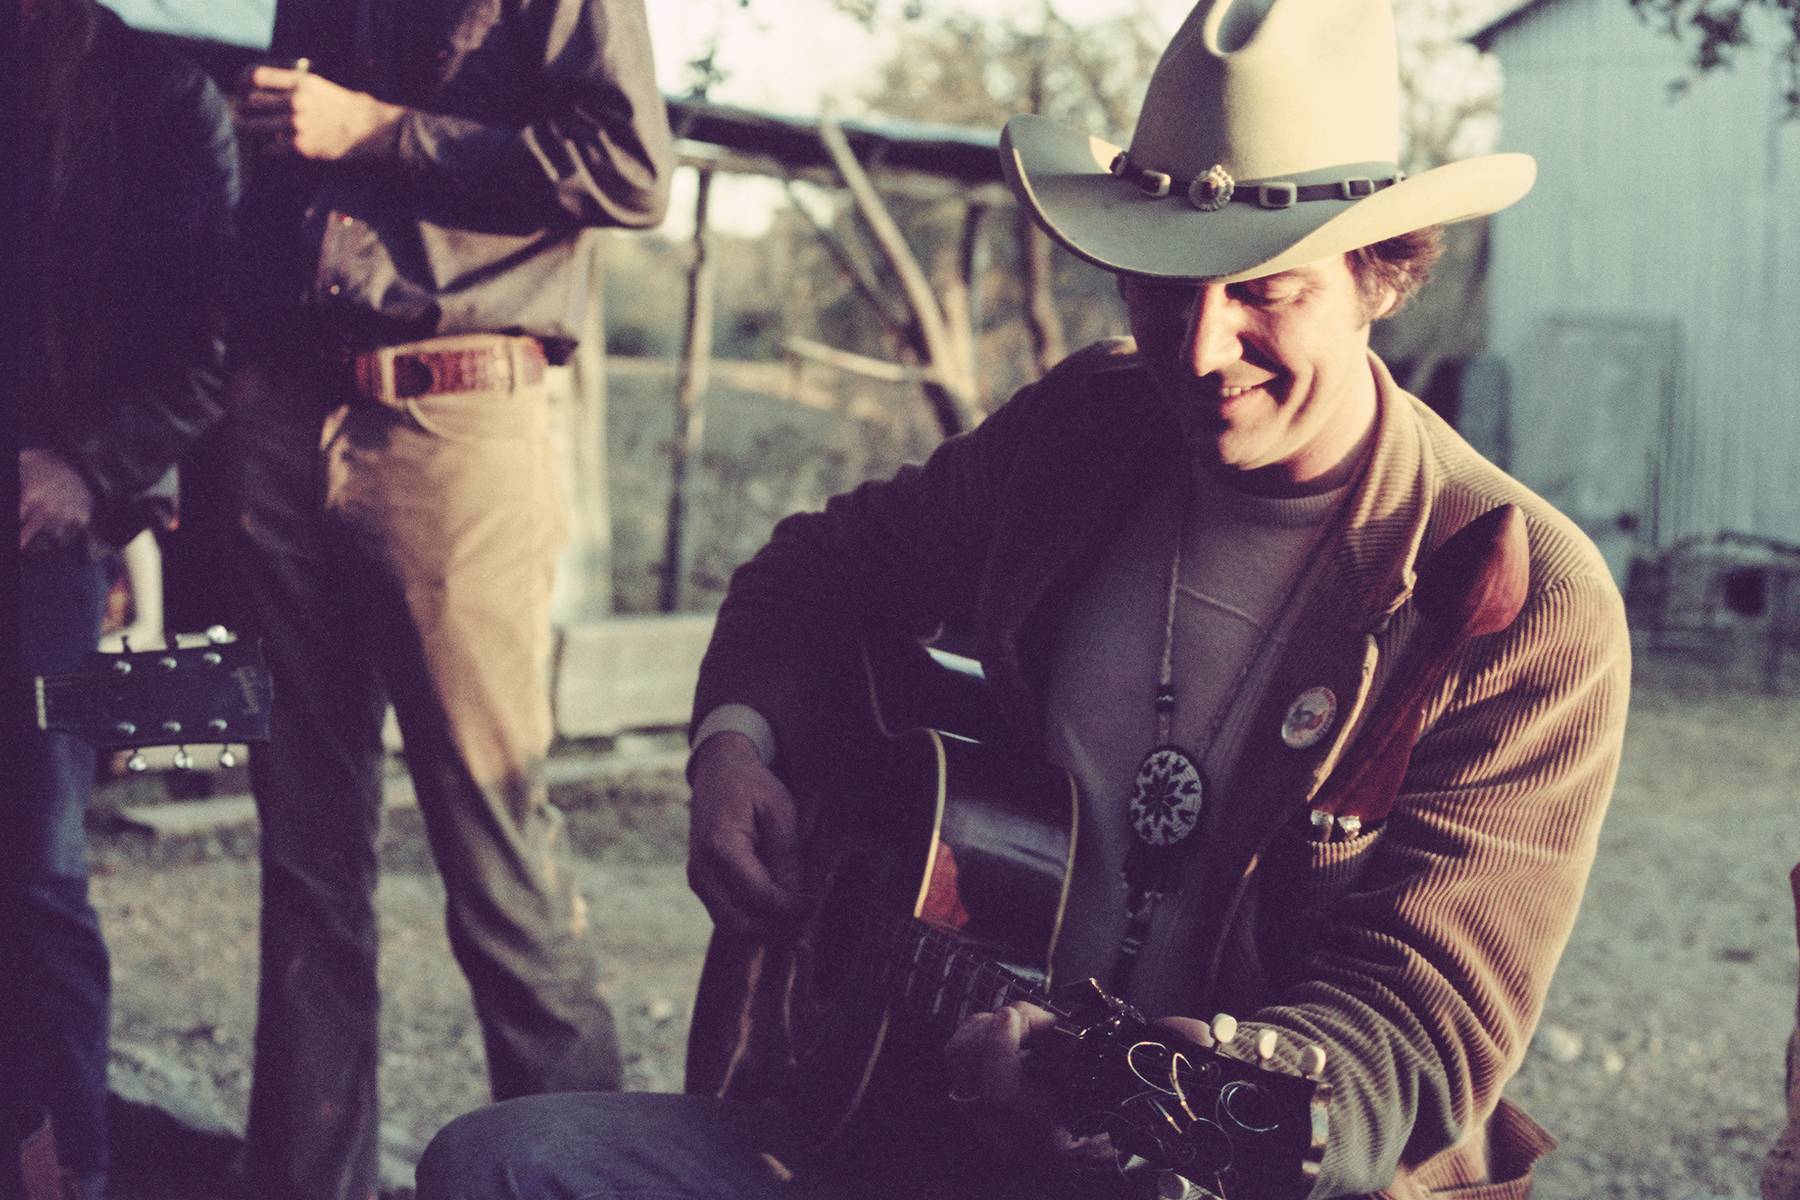 man in cowboy hat plays a guitar